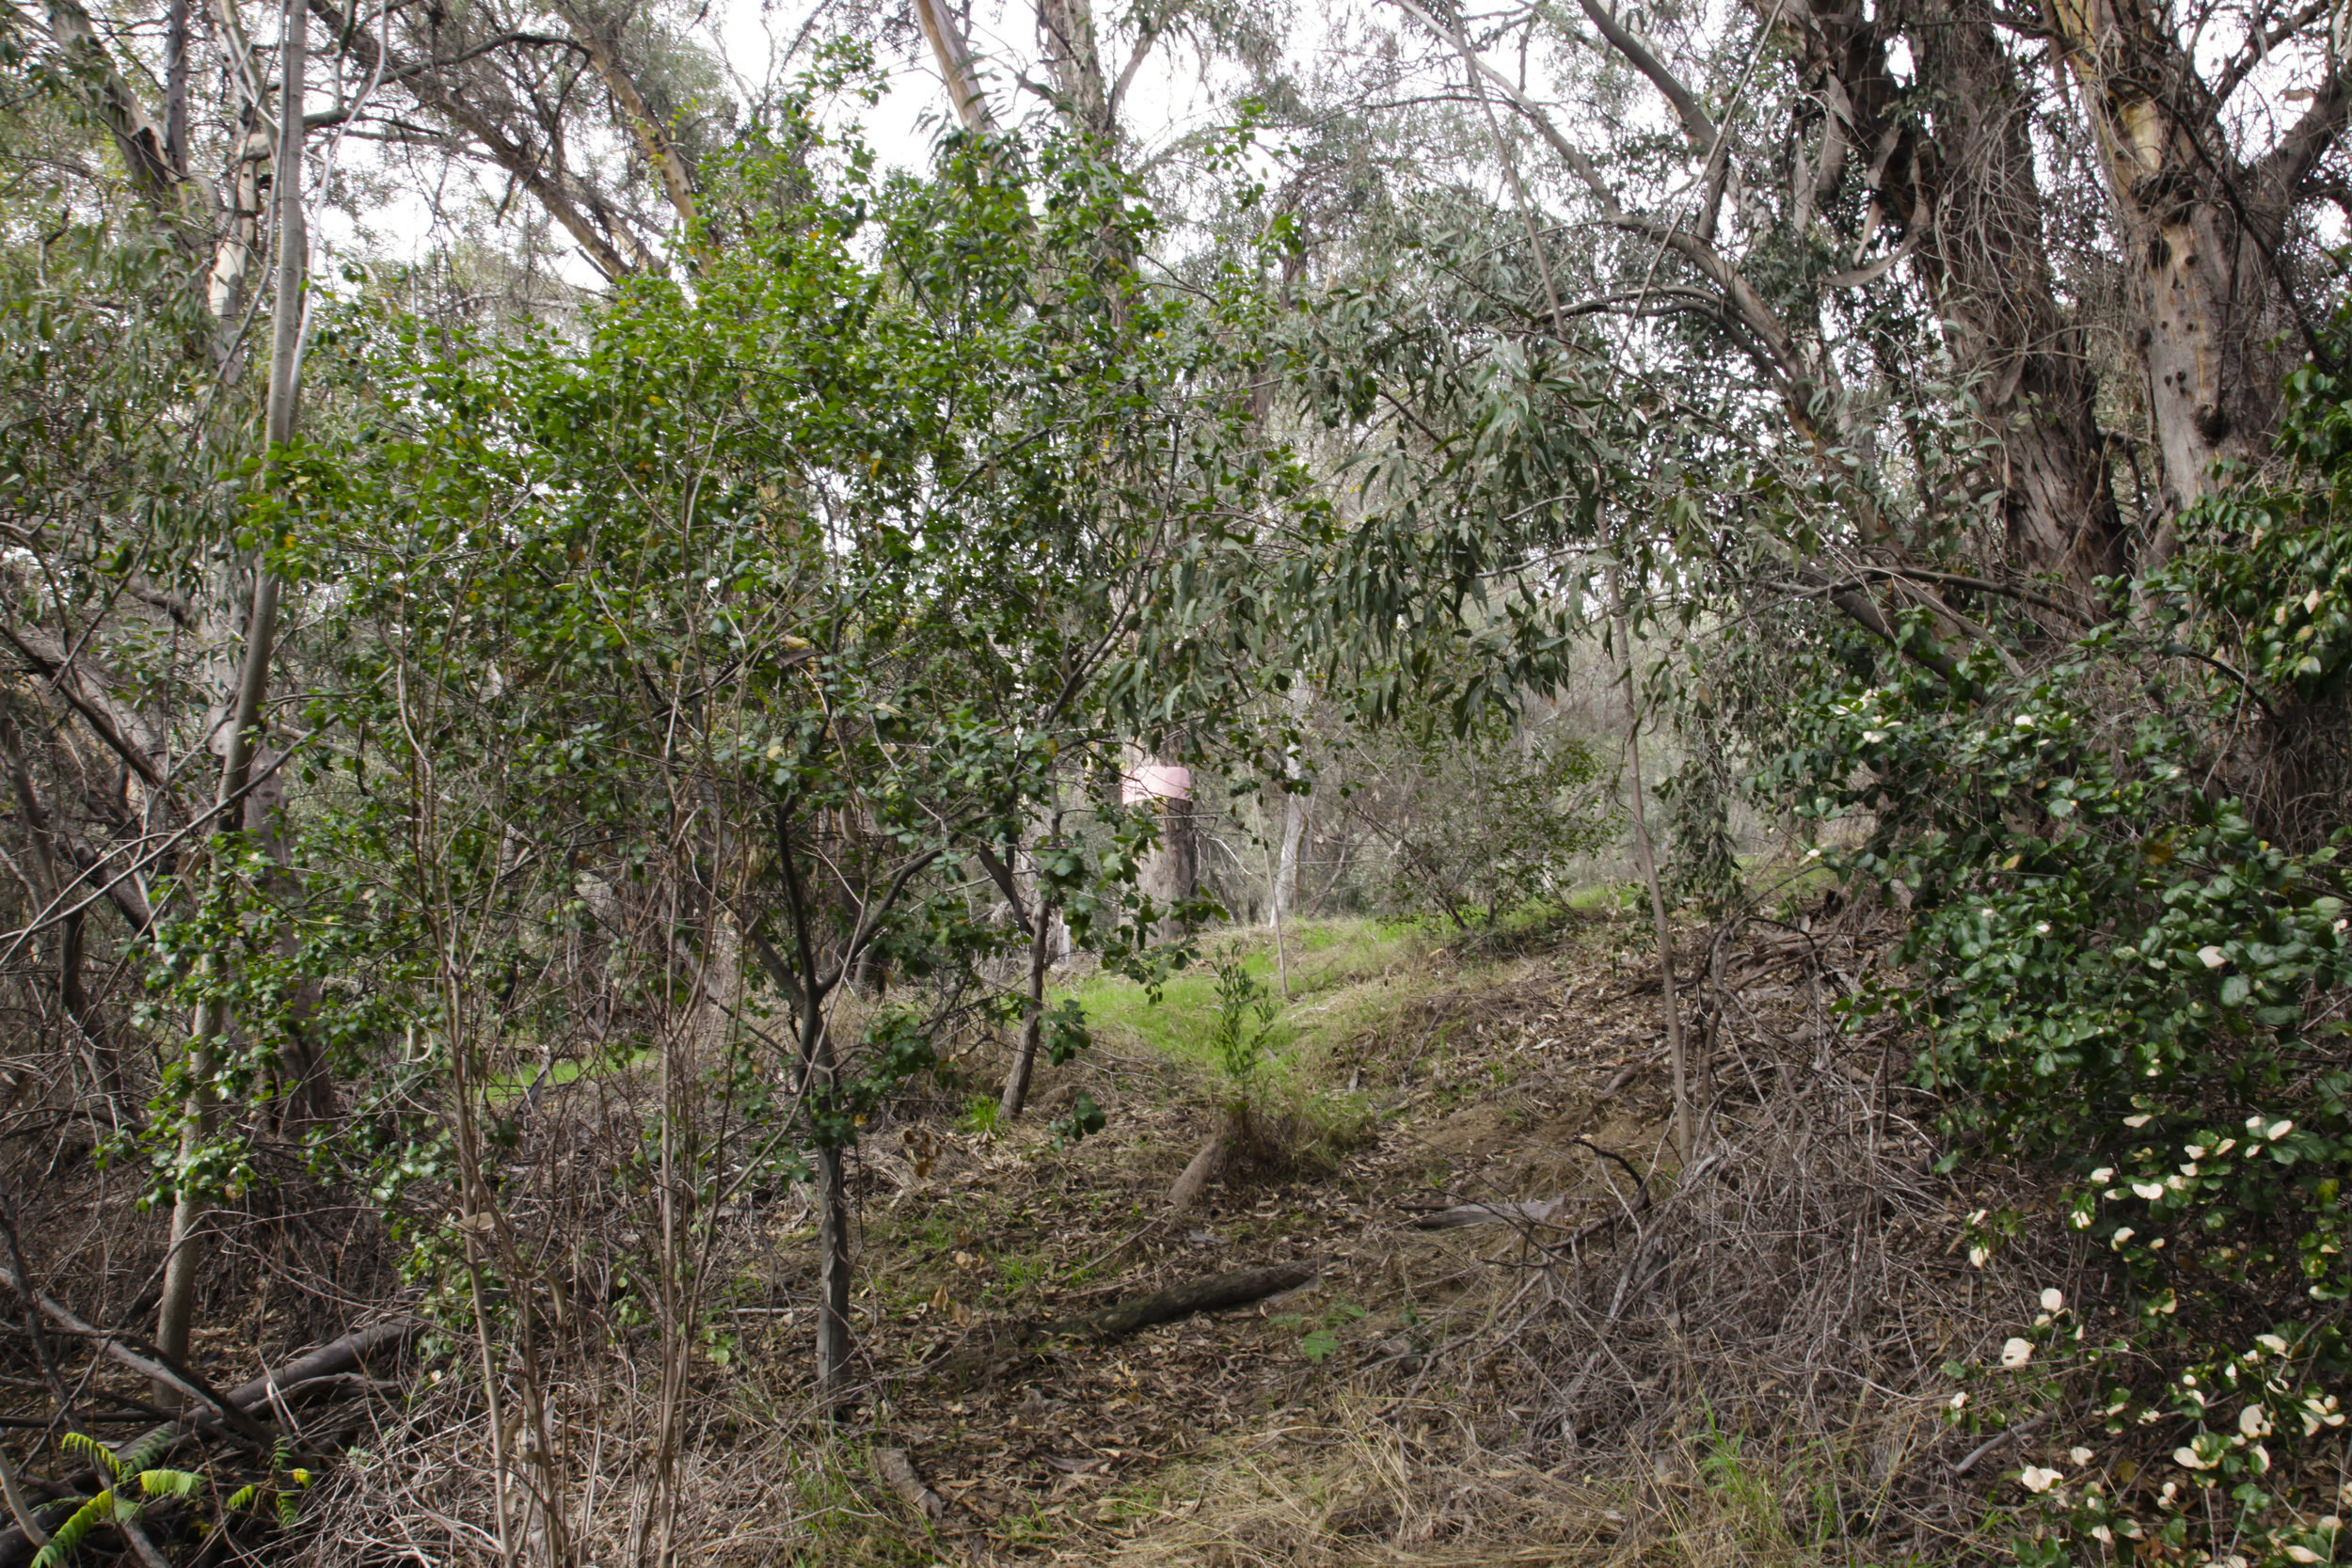 Eucalyptus Carvers: A public art intervention in Elysian Park, 1